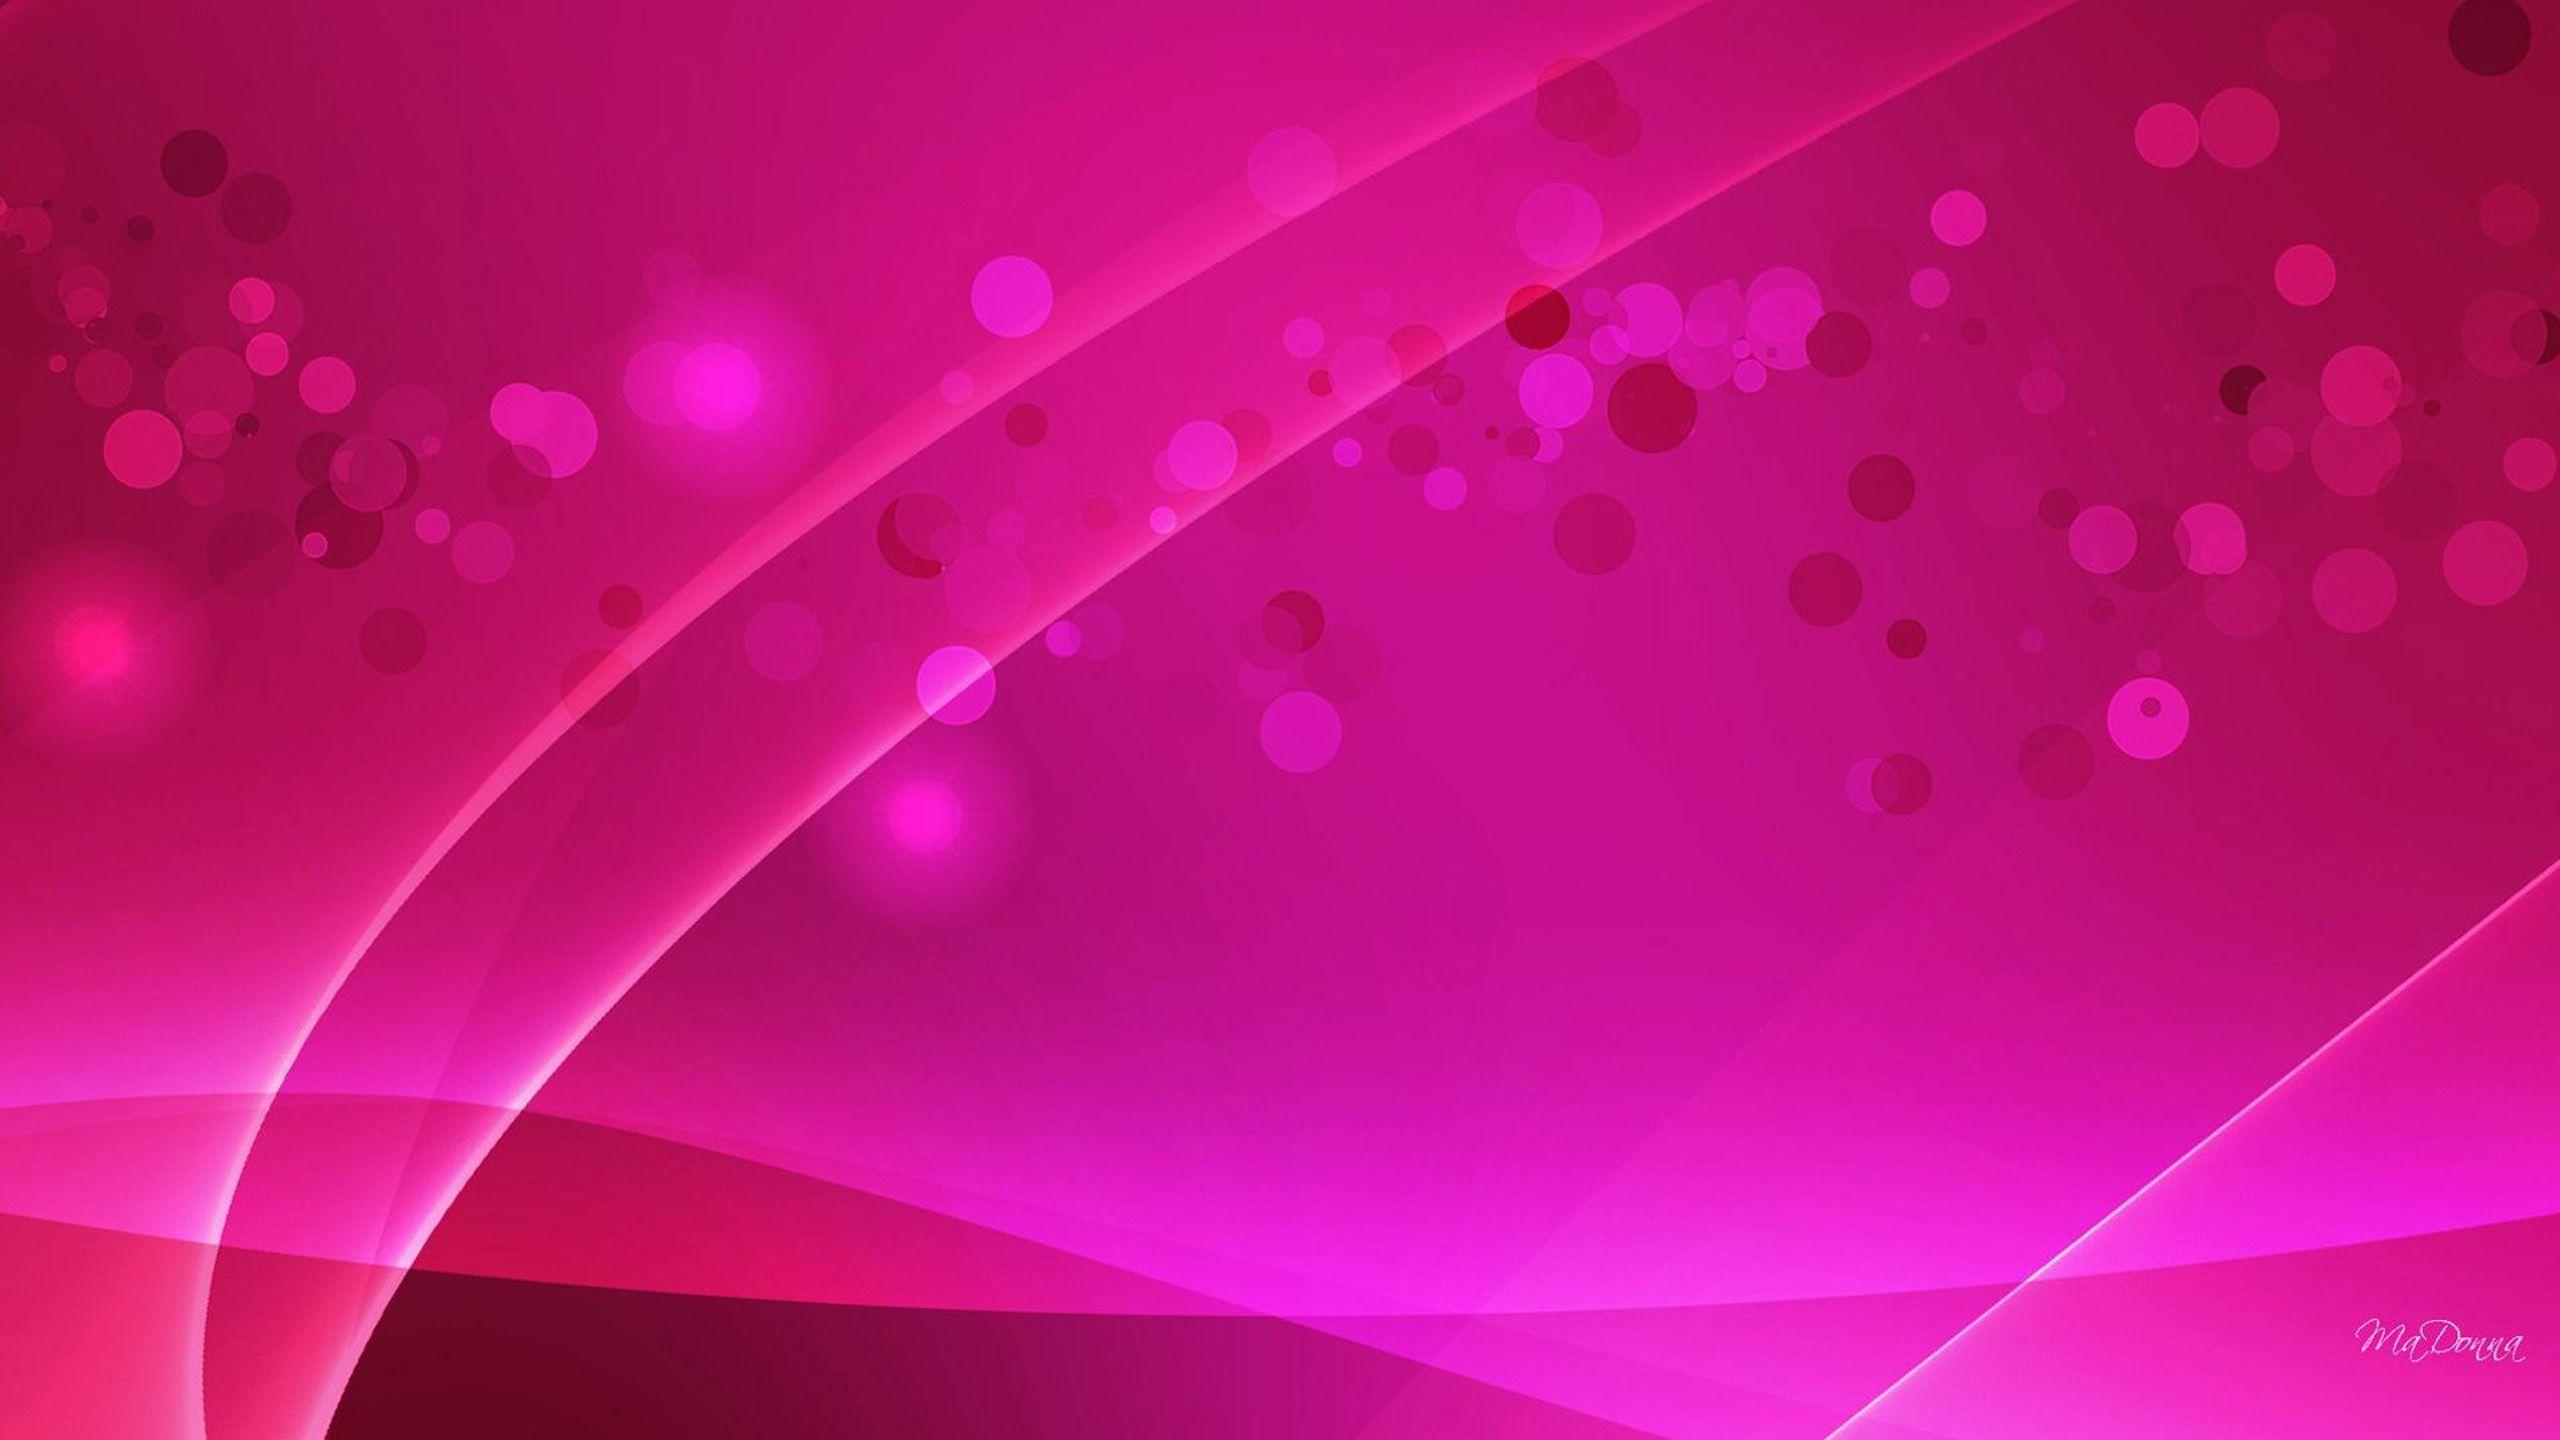 Pink Abstract HD Desktop Wallpapers - Top Free Pink Abstract HD Desktop Backgrounds